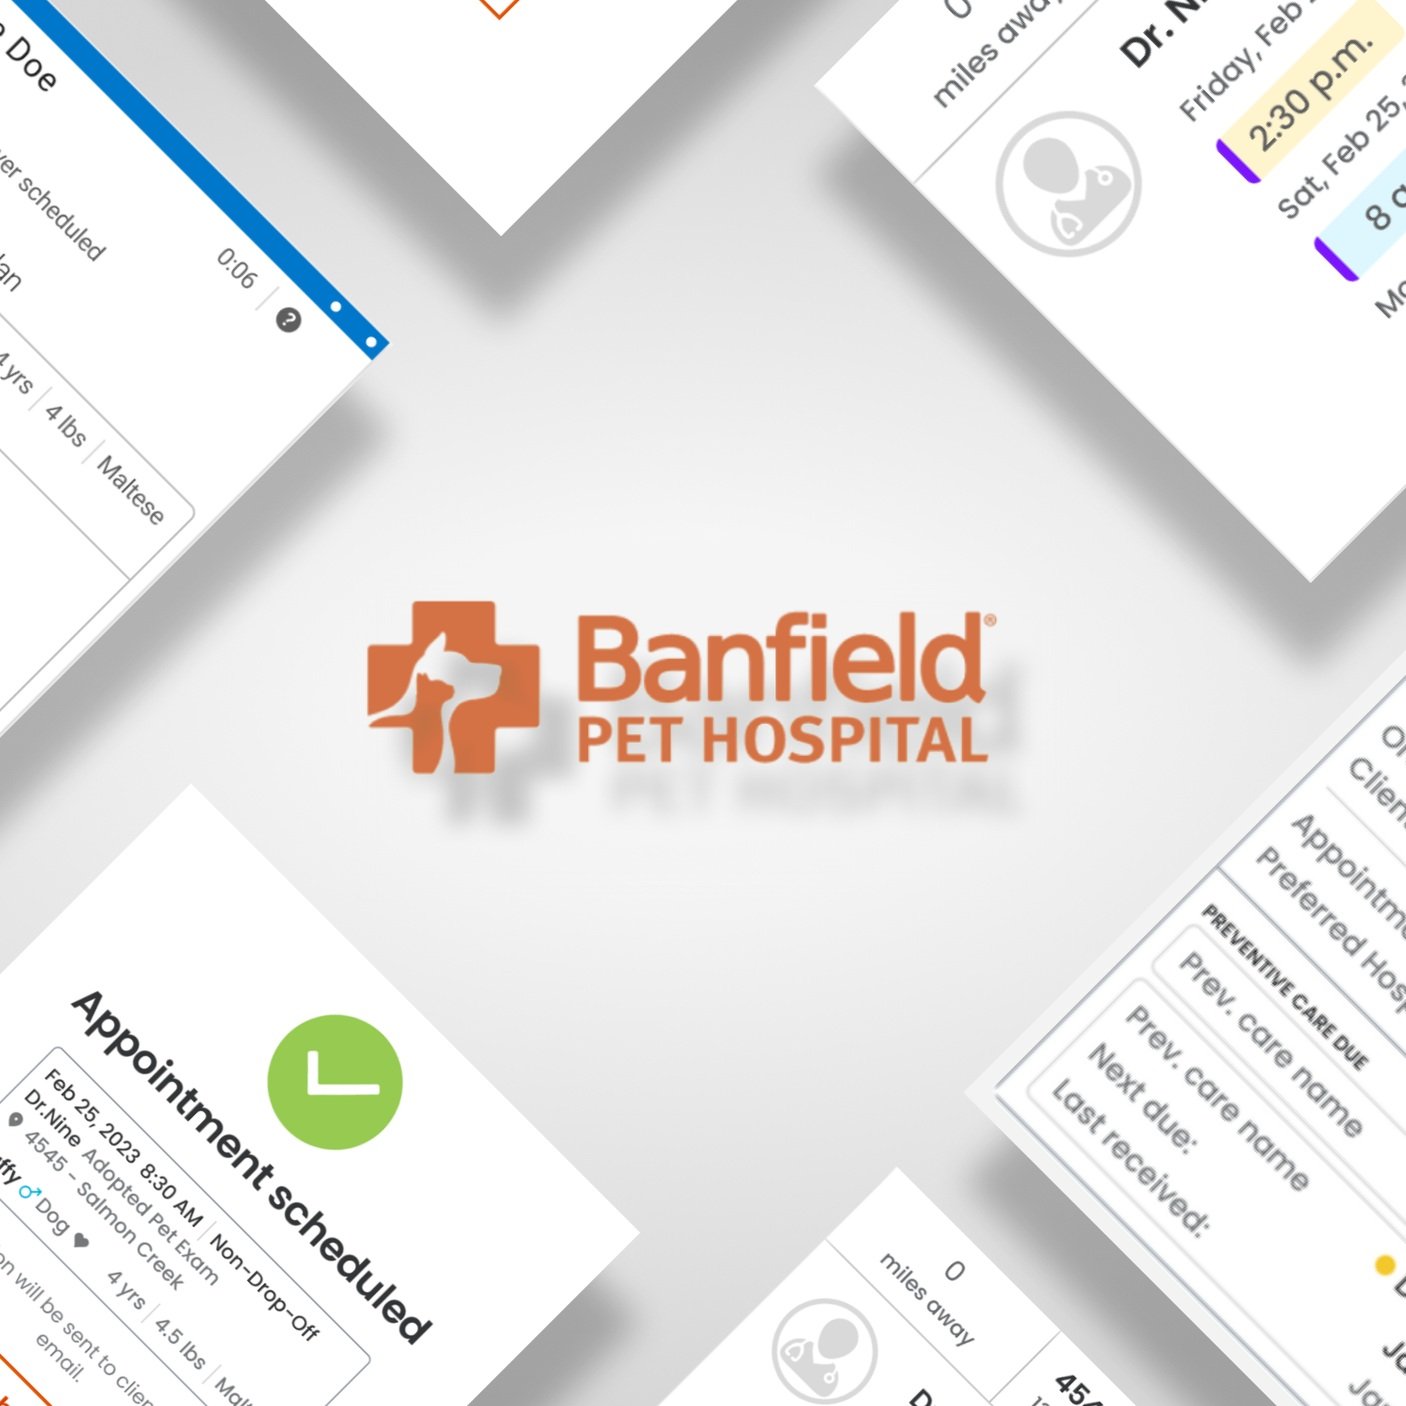 2023, Banfield Pet Hospital: Scheduling tool for call center associates